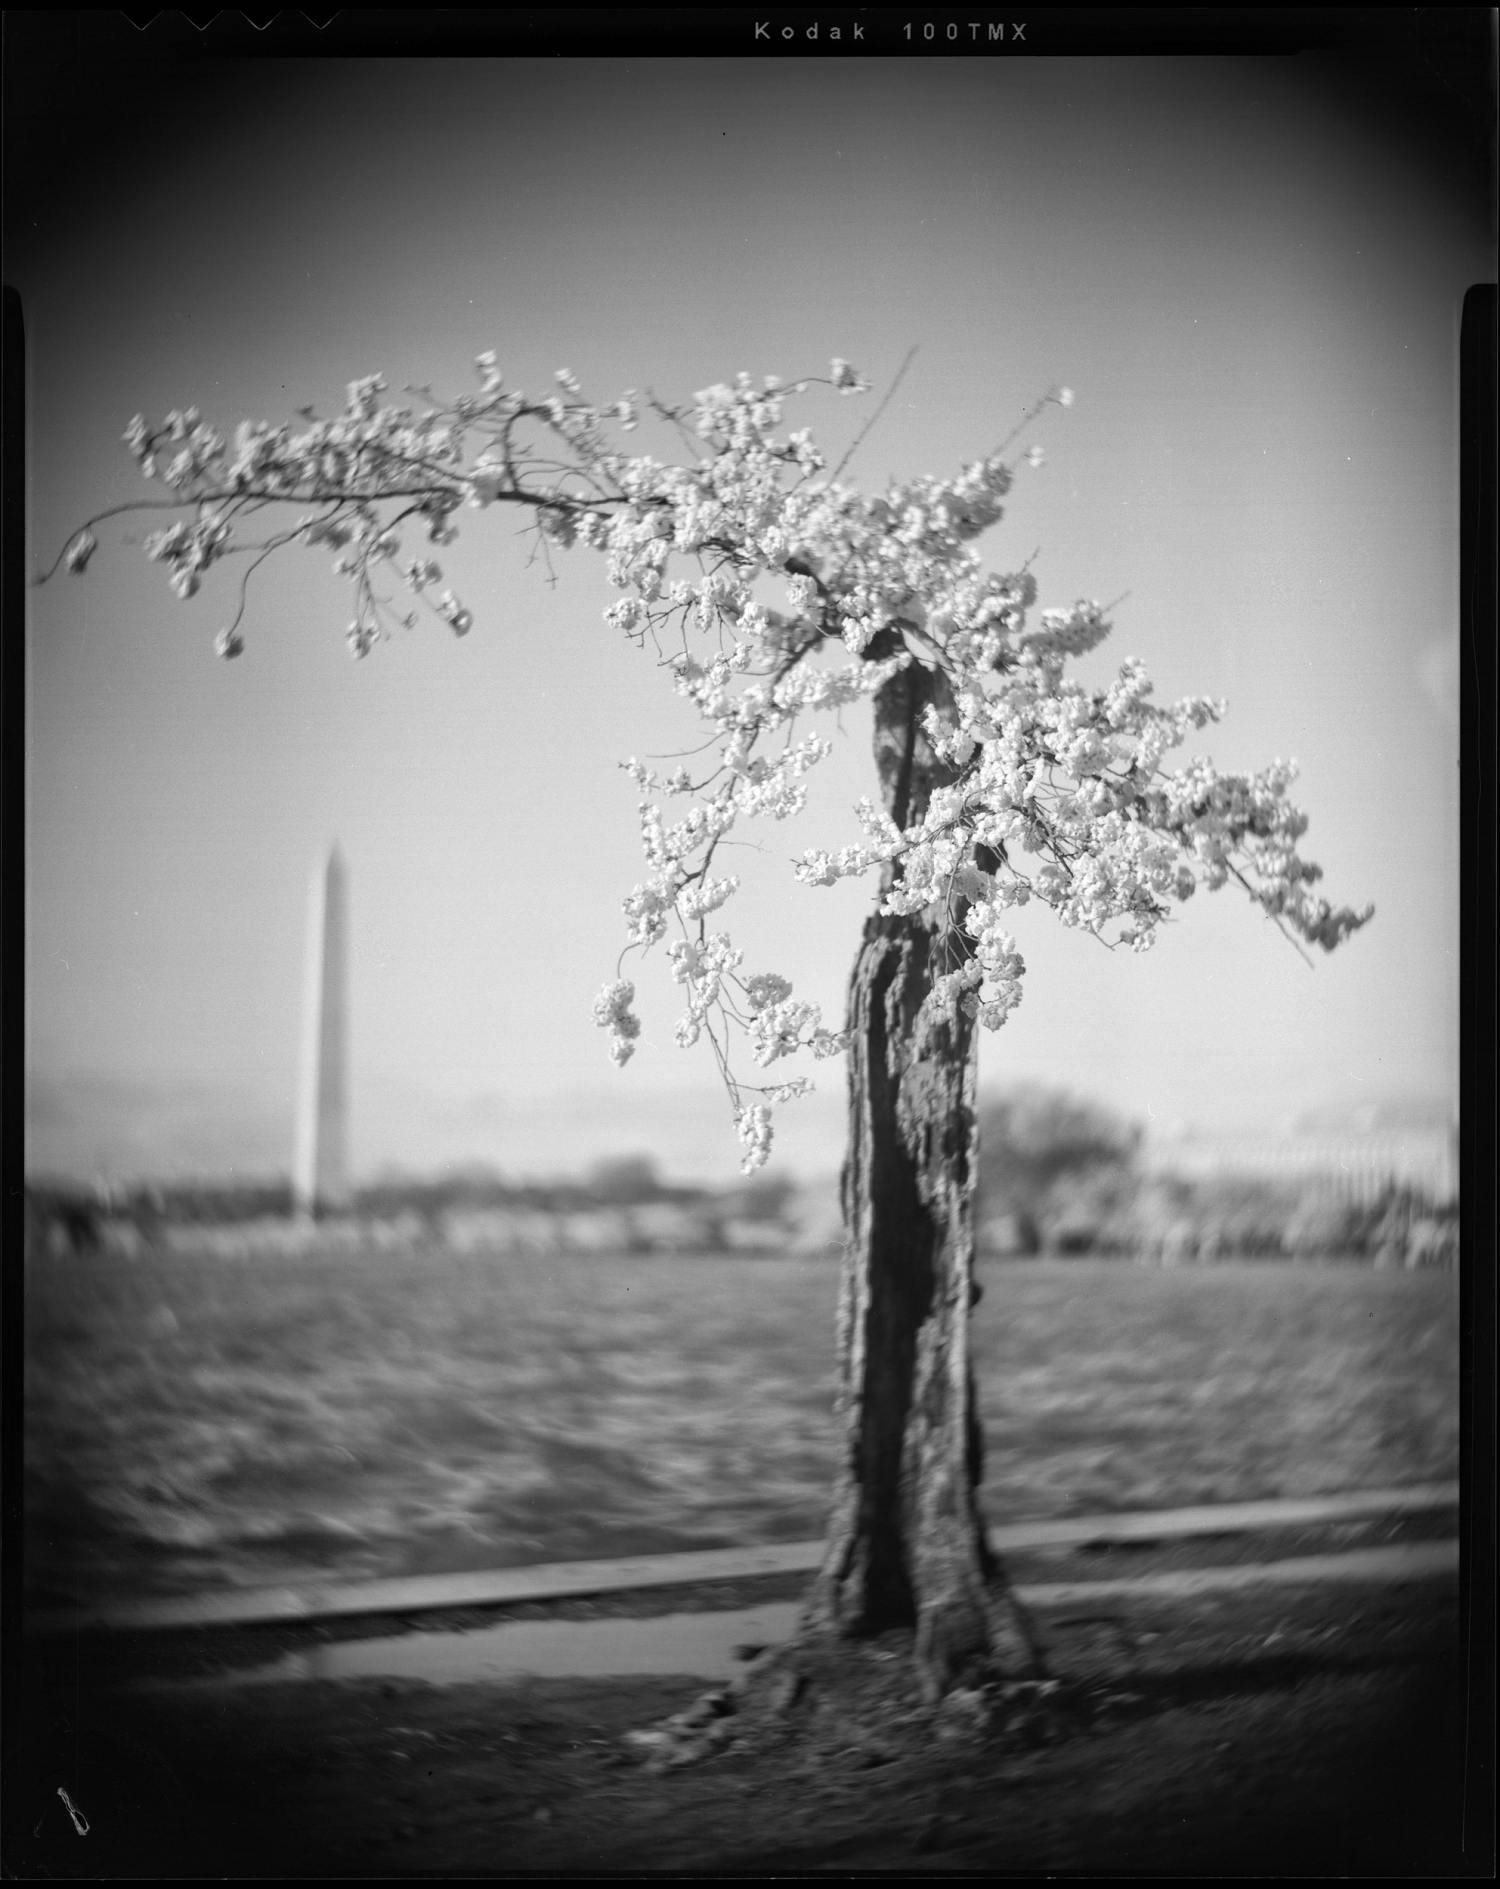 'Stumpy,' a beloved Japanese cherry tree, makes its last bloom in Washington